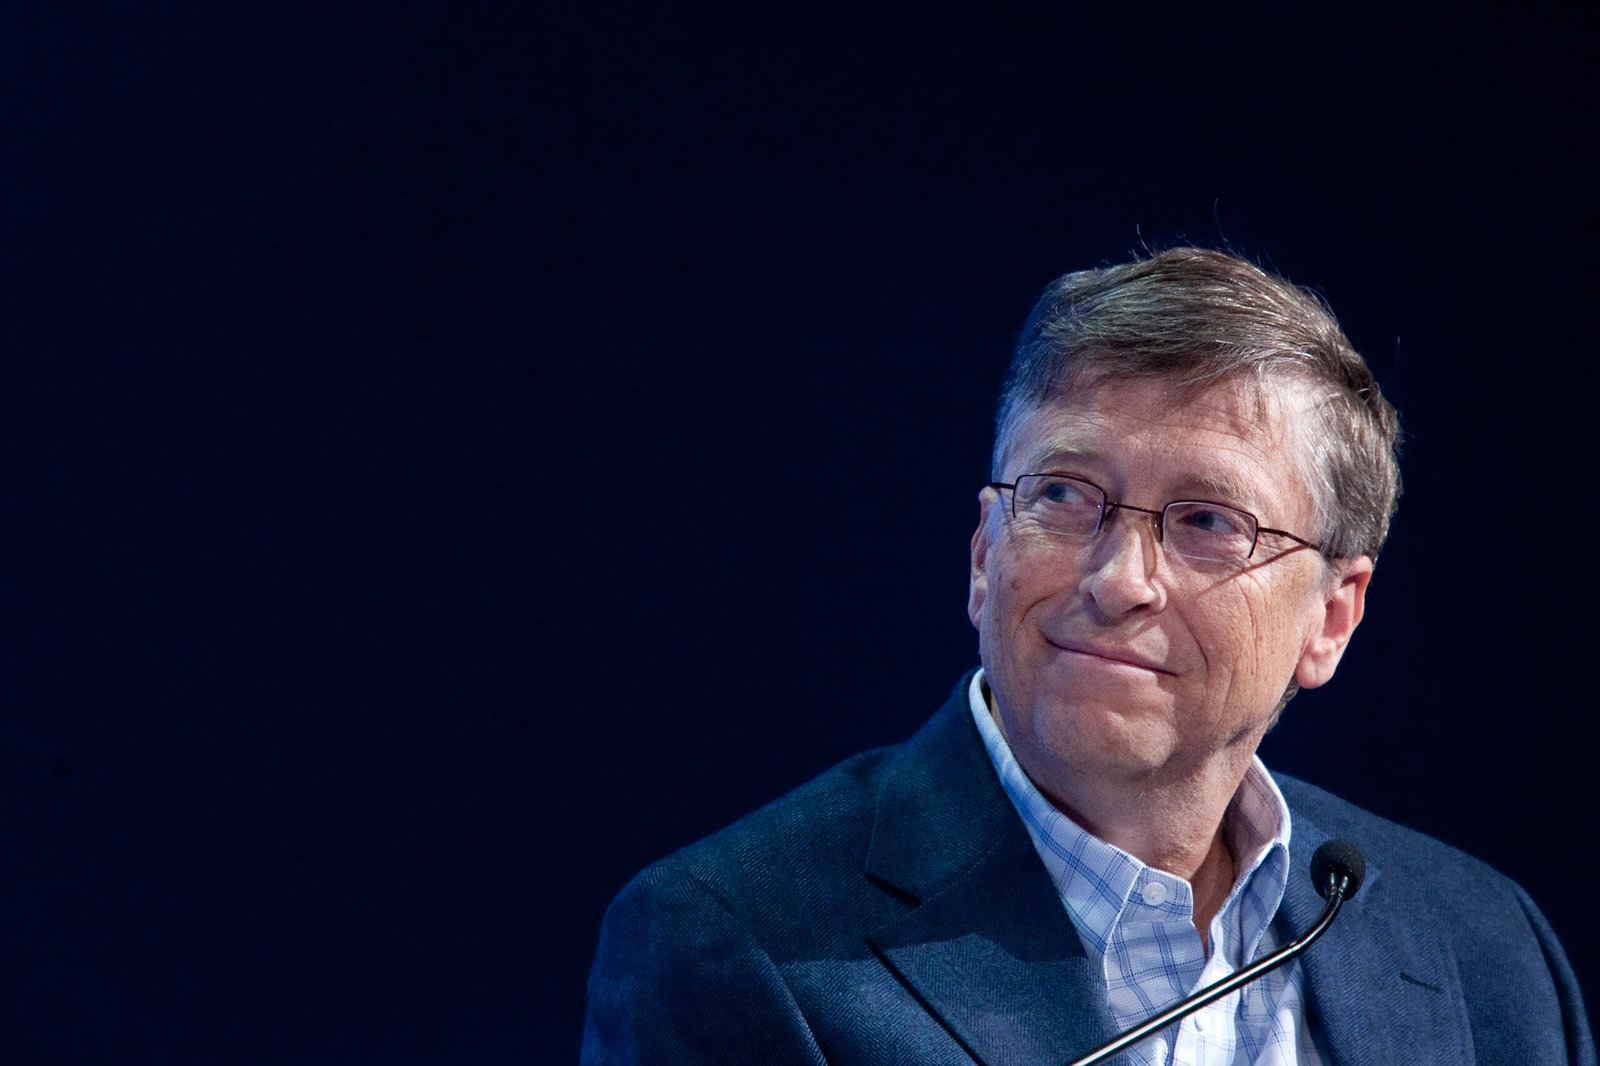 Bill Gates Donates Additional $250M To Battle Covid-19